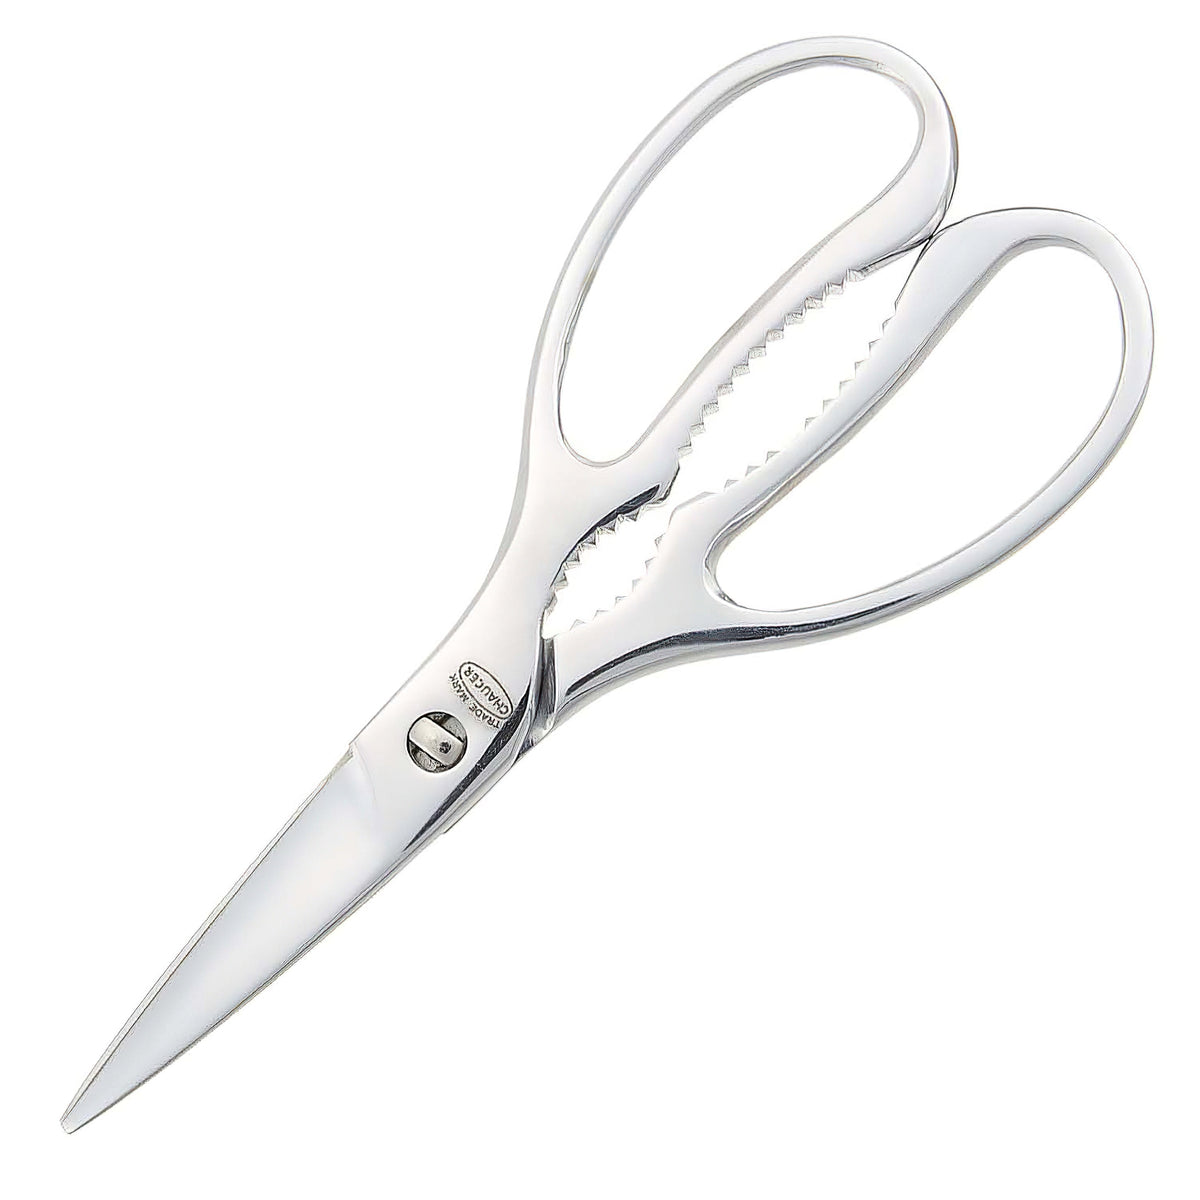 INTECKaneki Stainless Steel Take-Apart Kitchen Scissors